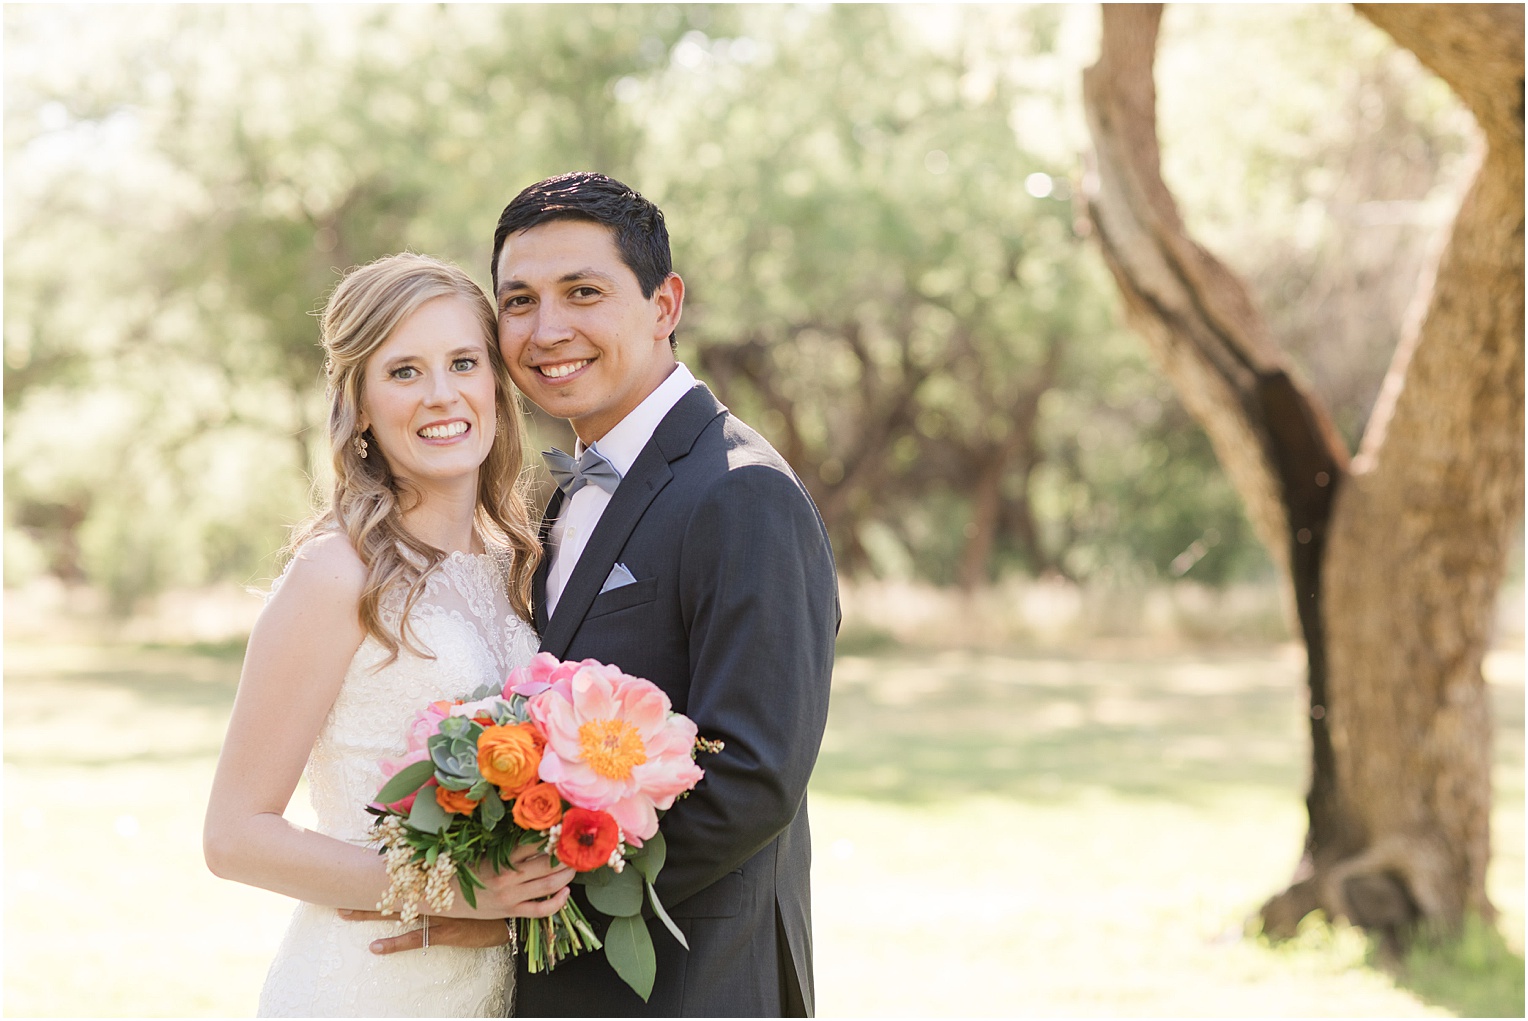 Agua Linda Farm Wedding Tucson AZ Megan & Jorge bride and groom portraits